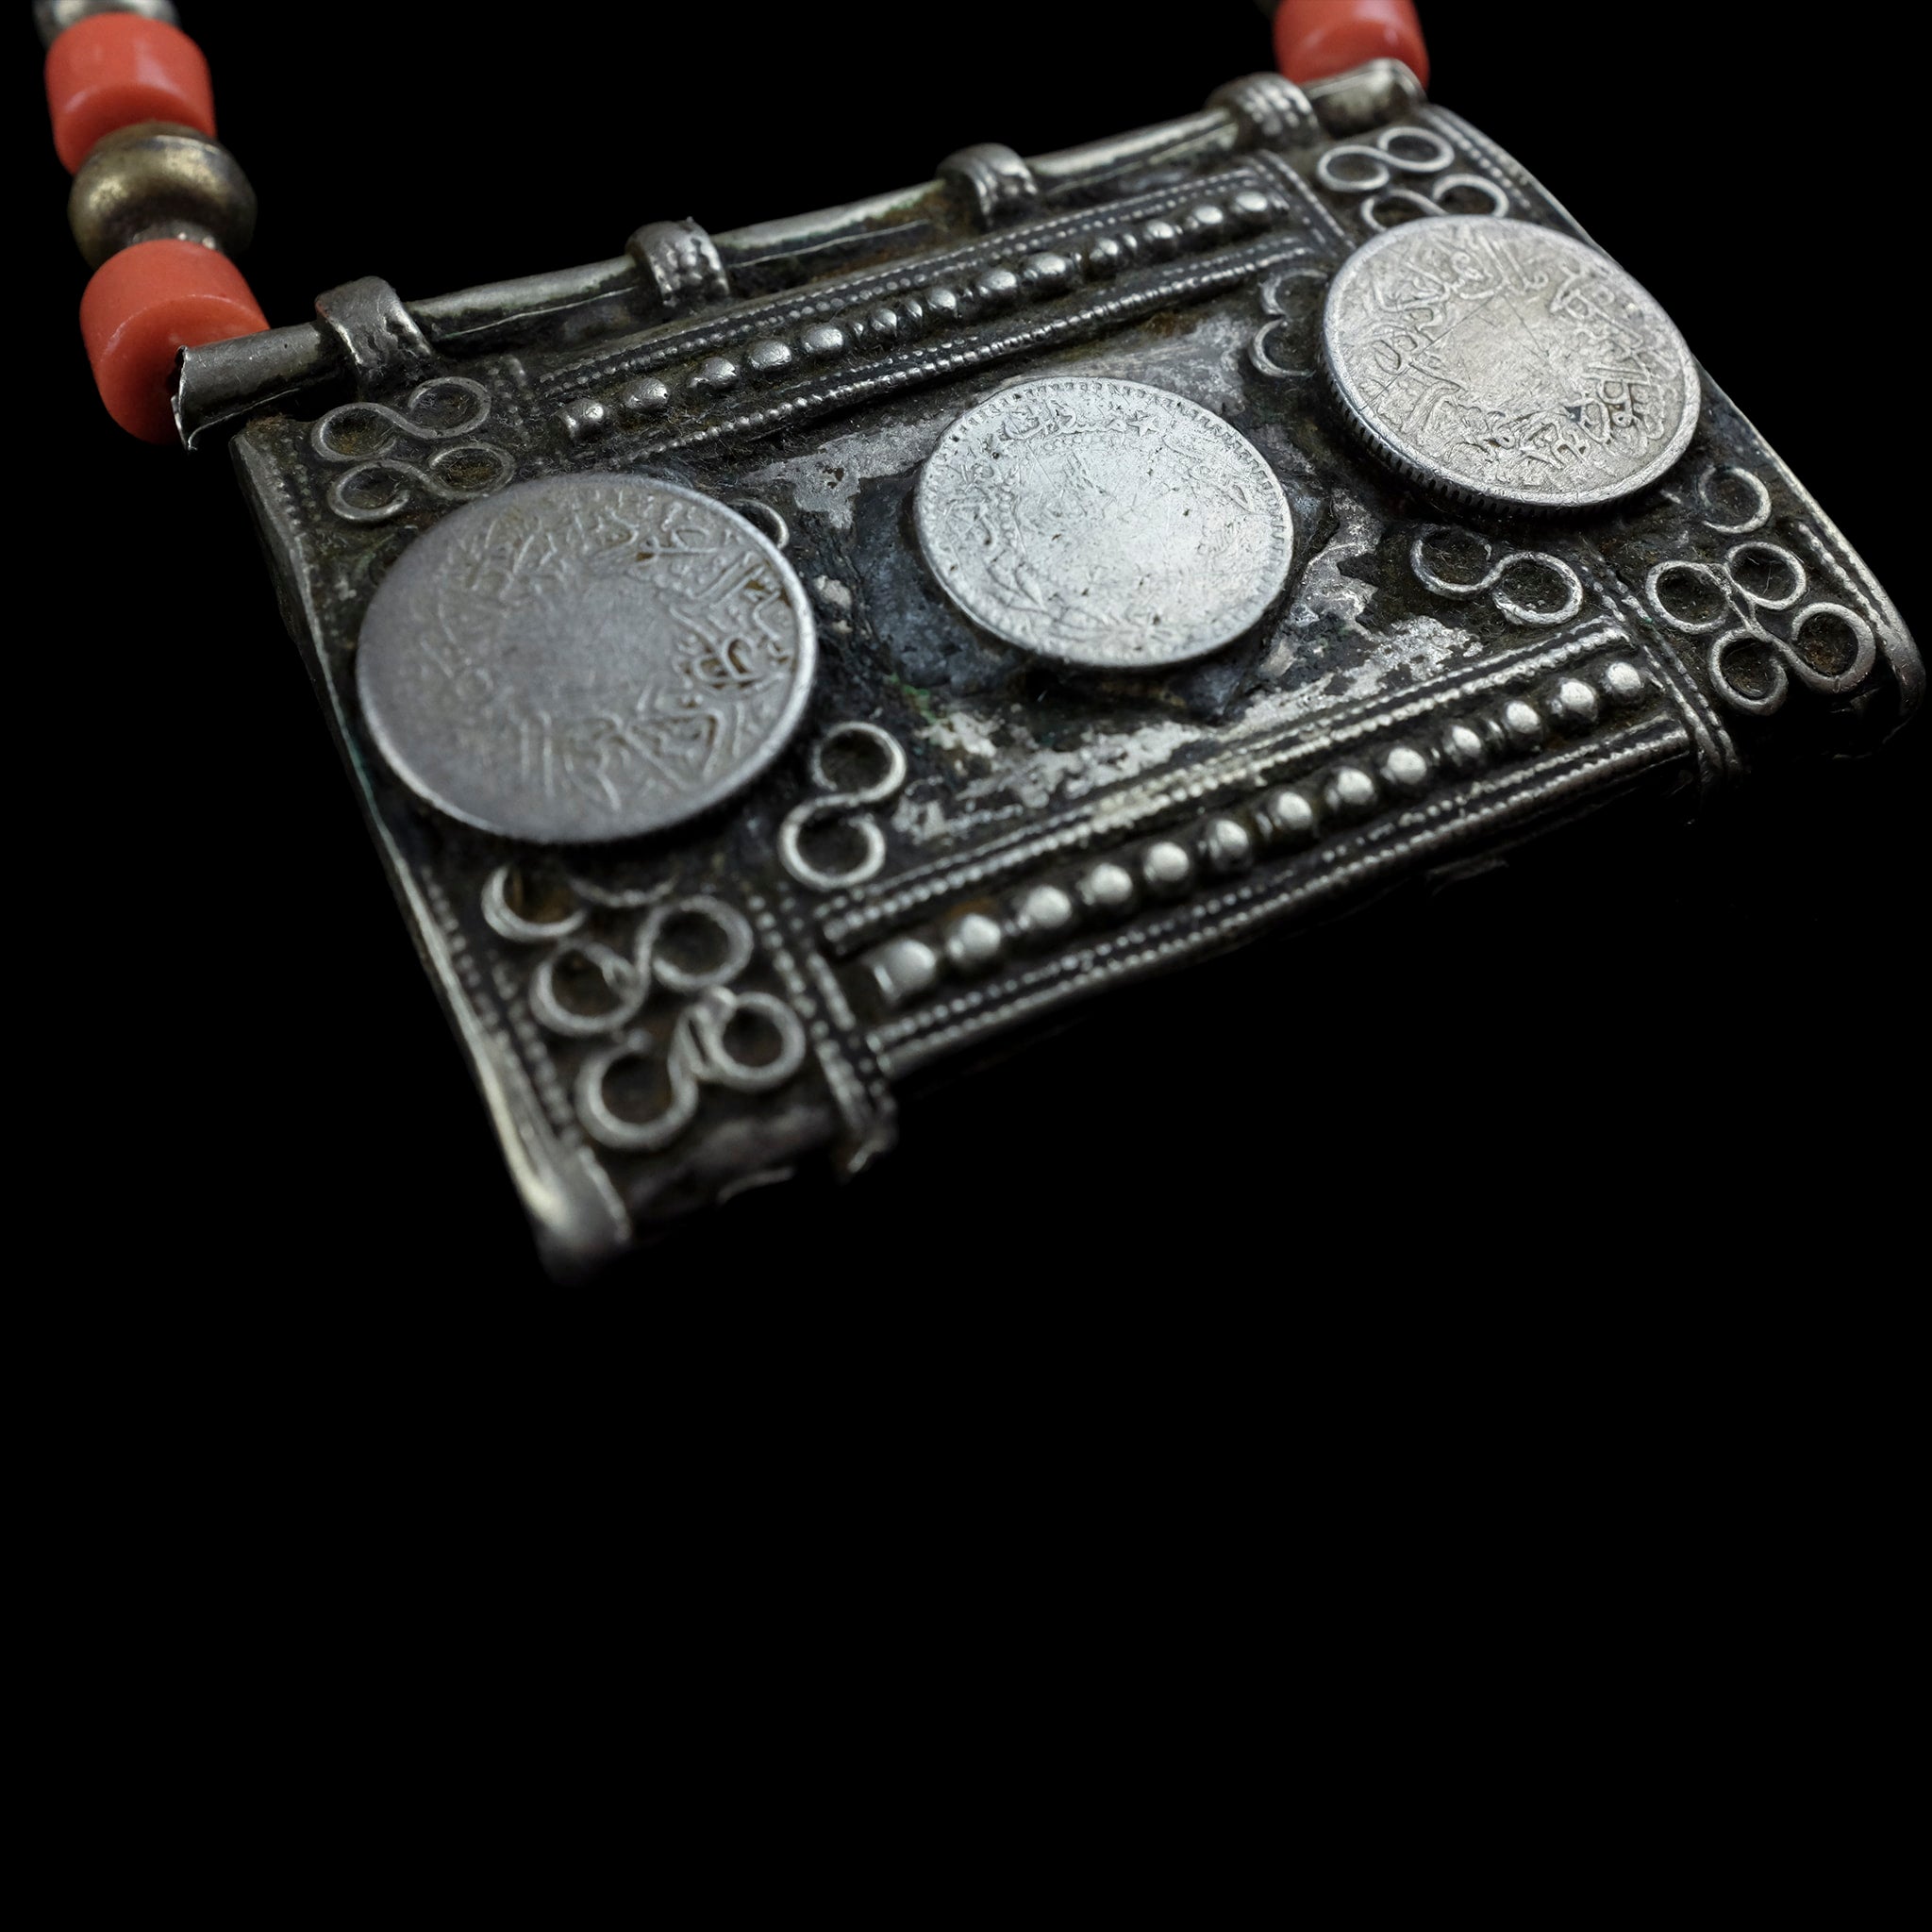 Antique Amulet Pendant from the Arabian Peninsula.